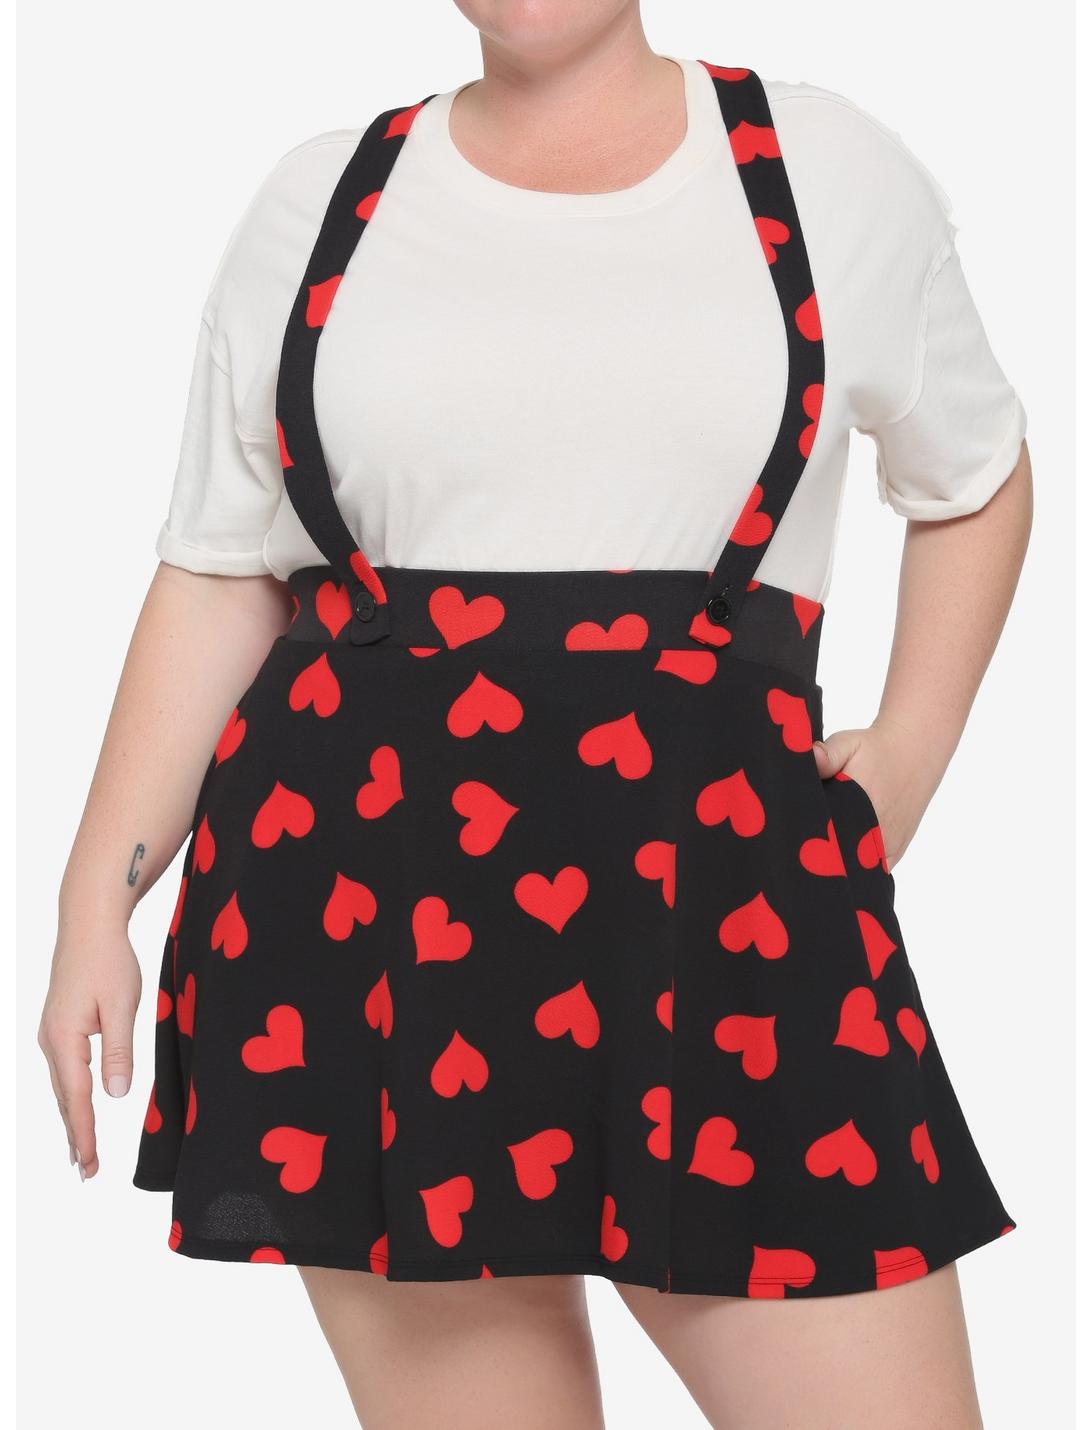 Red Hearts Black Suspender Skirt Plus Size, BLACK  RED, hi-res